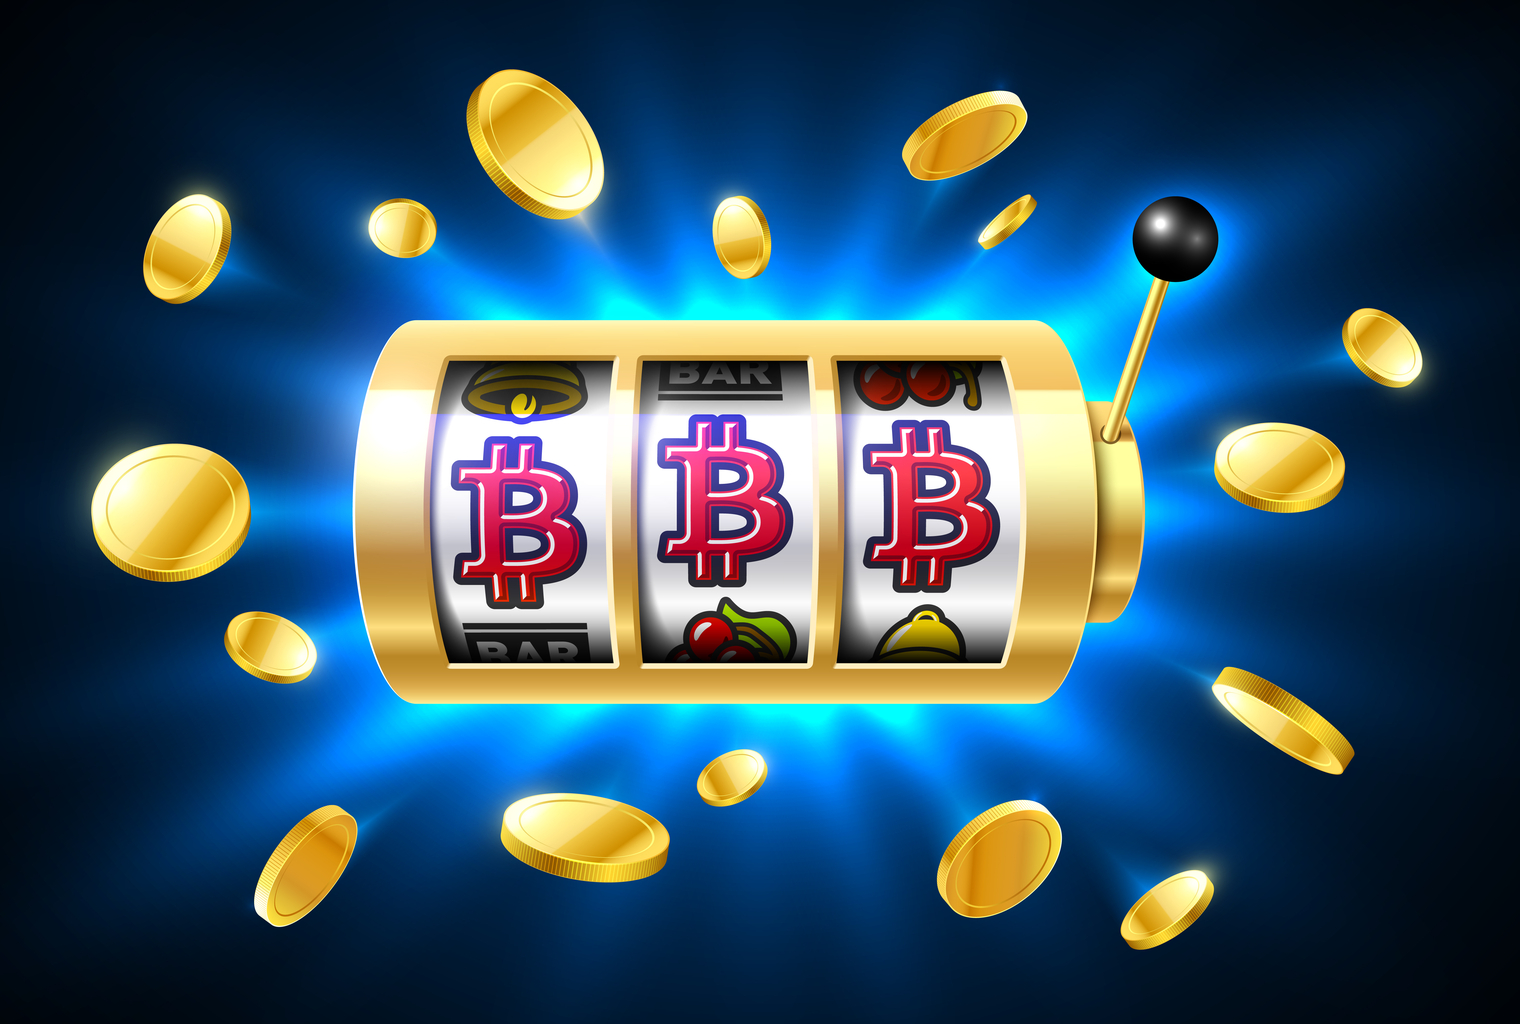 Spin bitcoin casino fun play